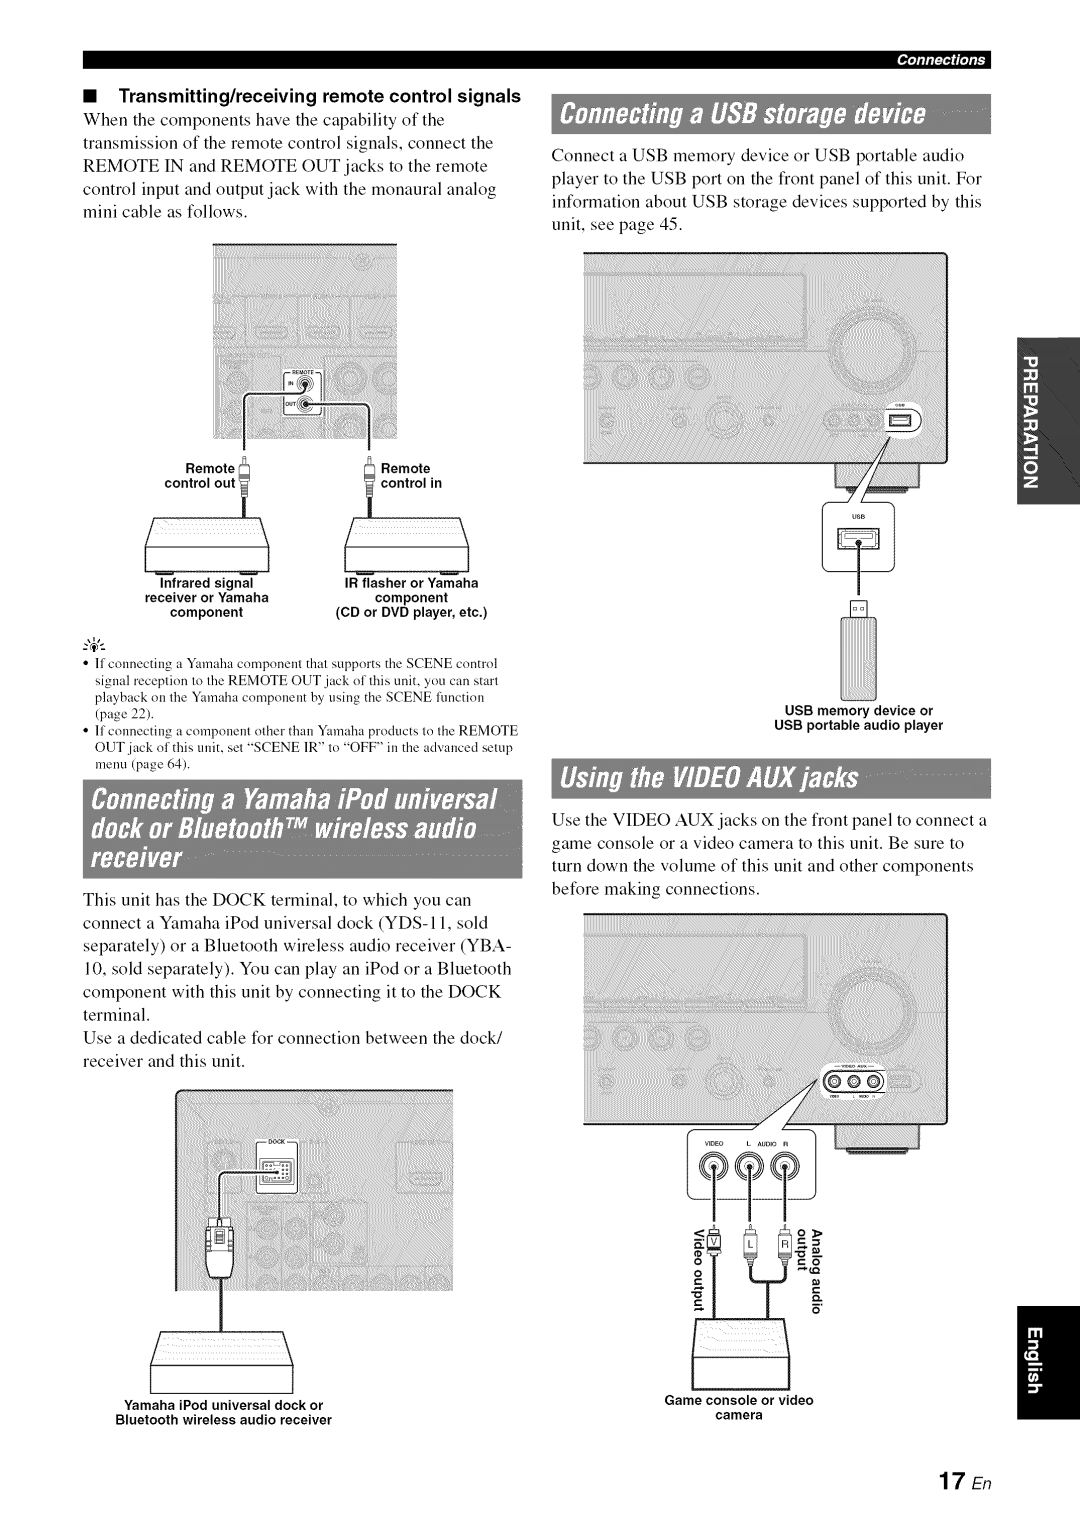 Yamaha RX-V1065 owner manual 17En, •Transmitting/receiving remote control signals 